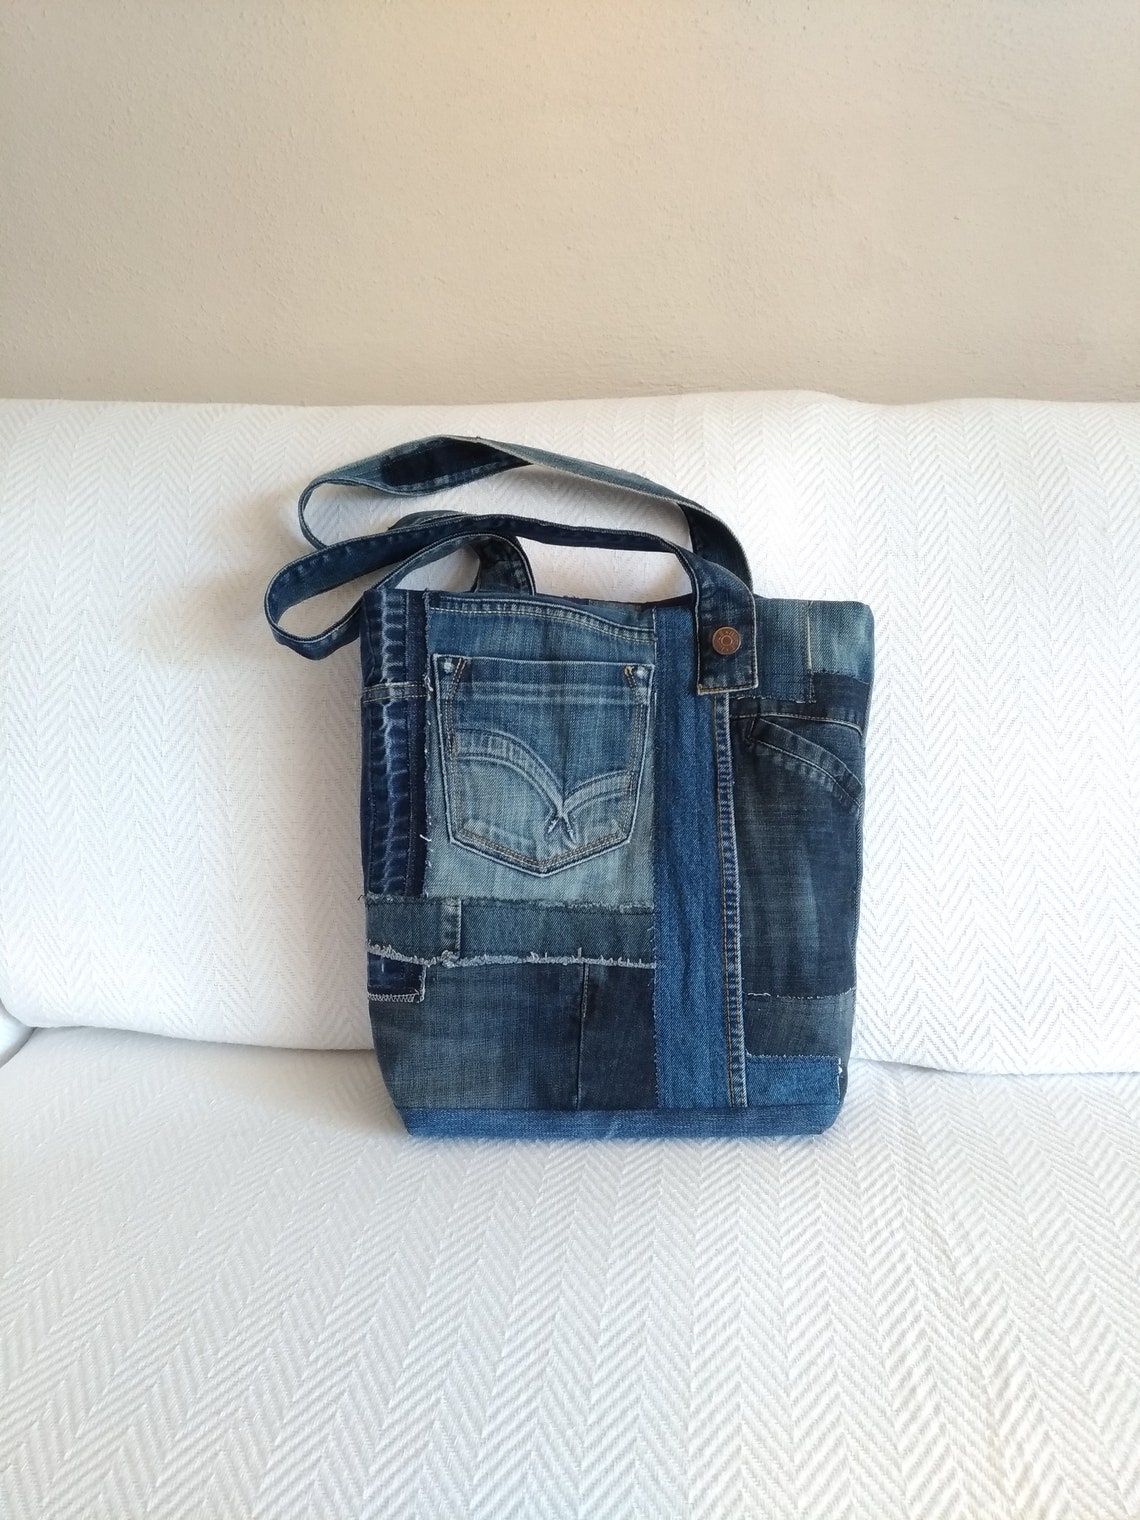 Patchwork Denim Tote Bag Upcycled Denim Bag Recycled Jeans | Etsy